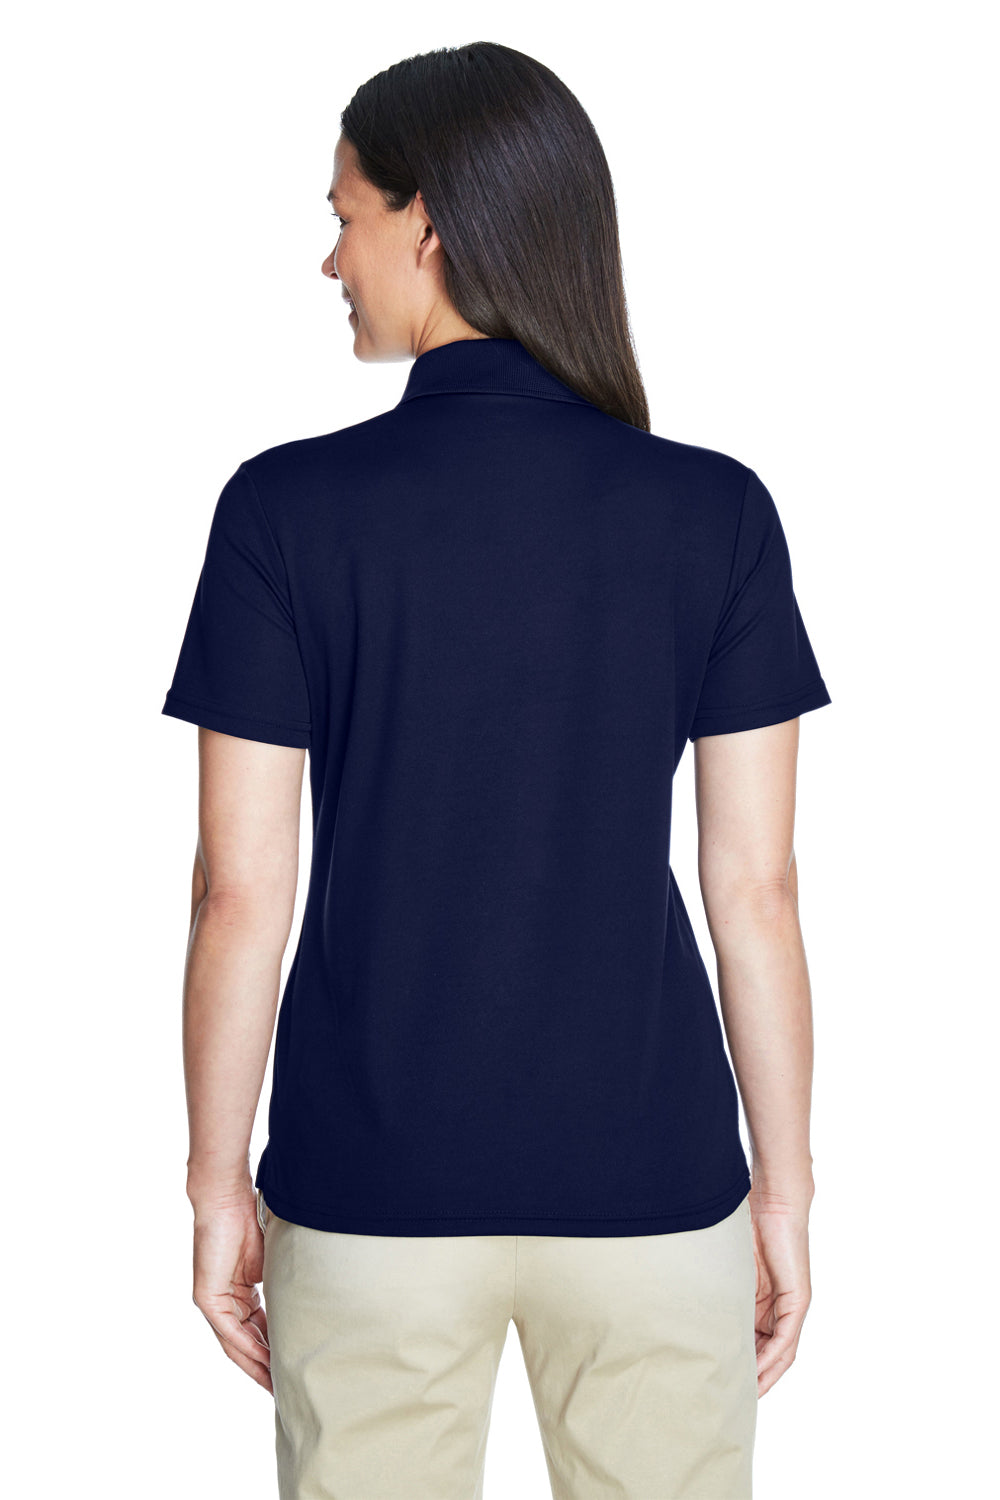 Core 365 78181 Womens Origin Performance Moisture Wicking Short Sleeve Polo Shirt Navy Blue Back